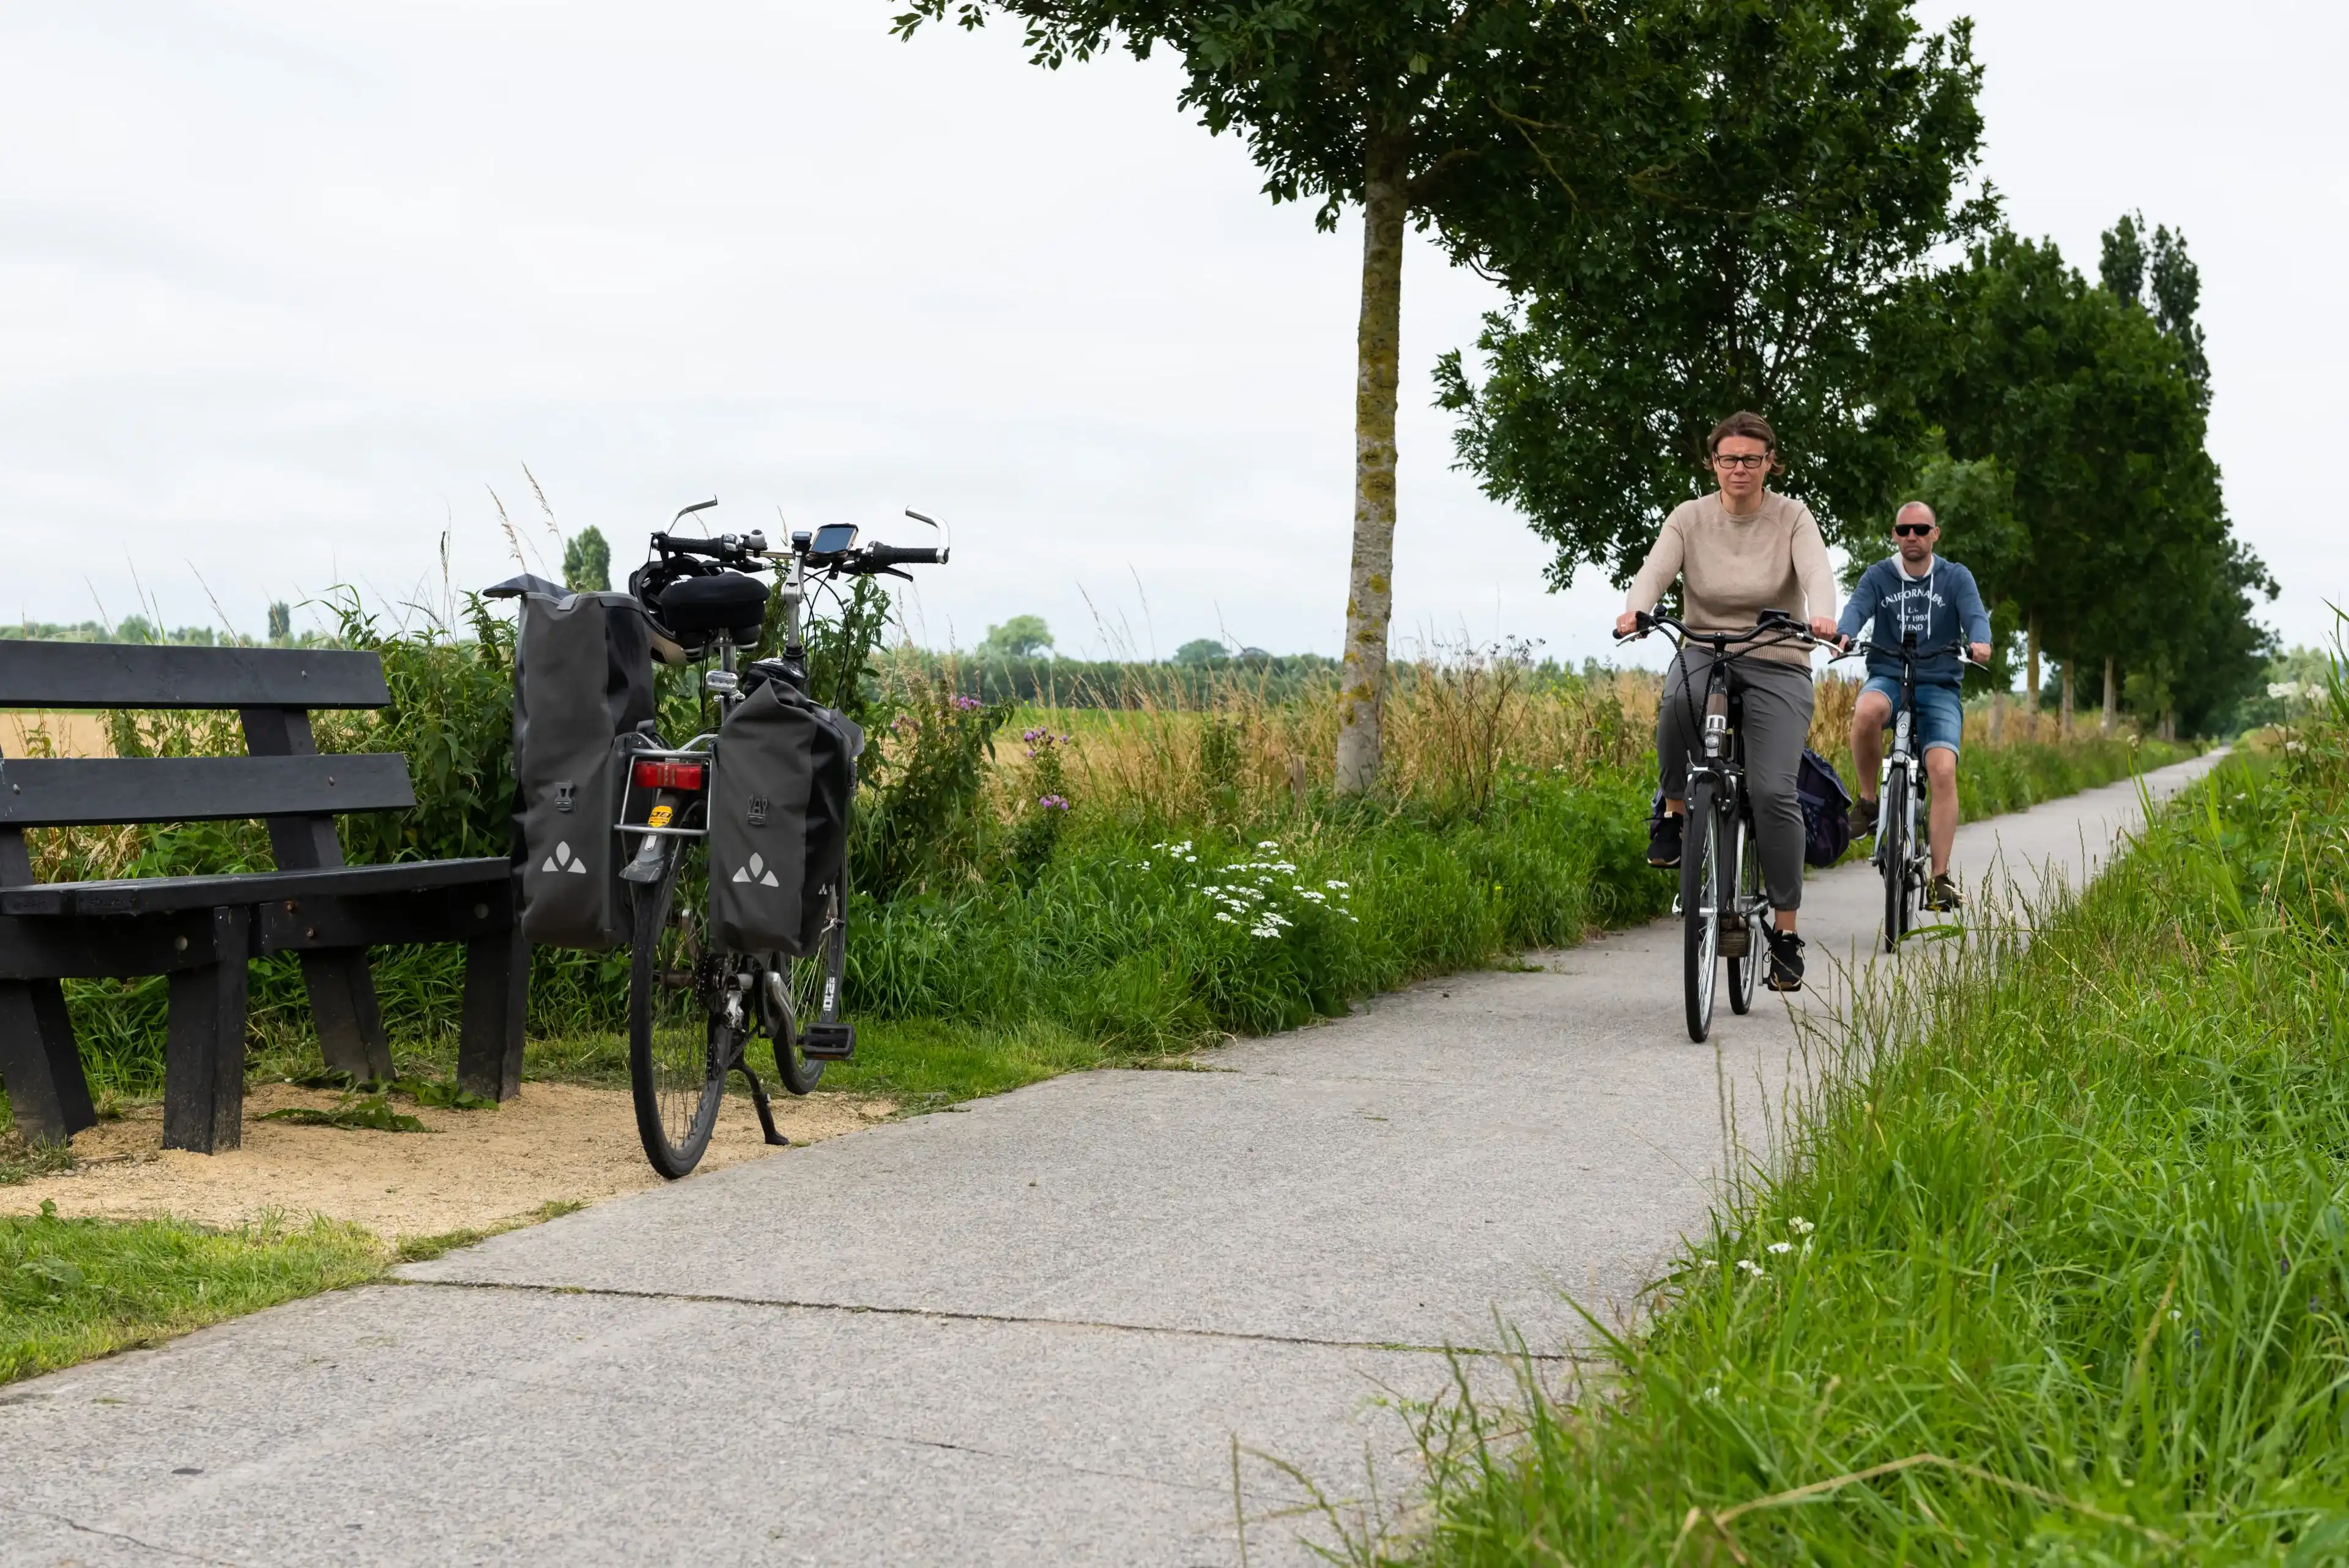 Veurne, West Flanders Region - Belgium - 07 18 2021 Recreative cycling path with biking couple